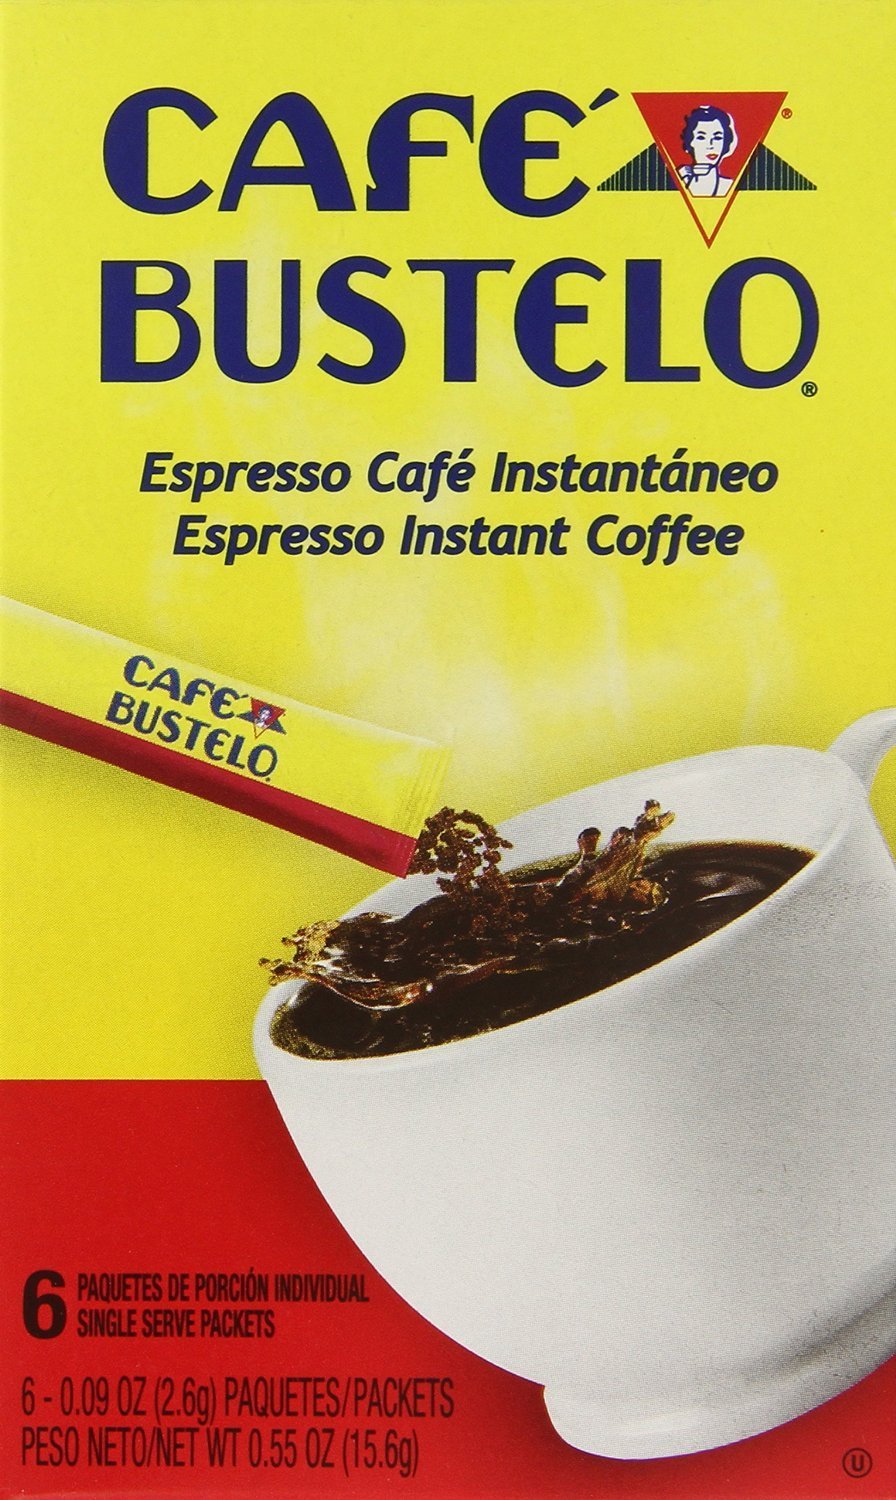 Cafe Bustelo Instant Coffee.jpeg